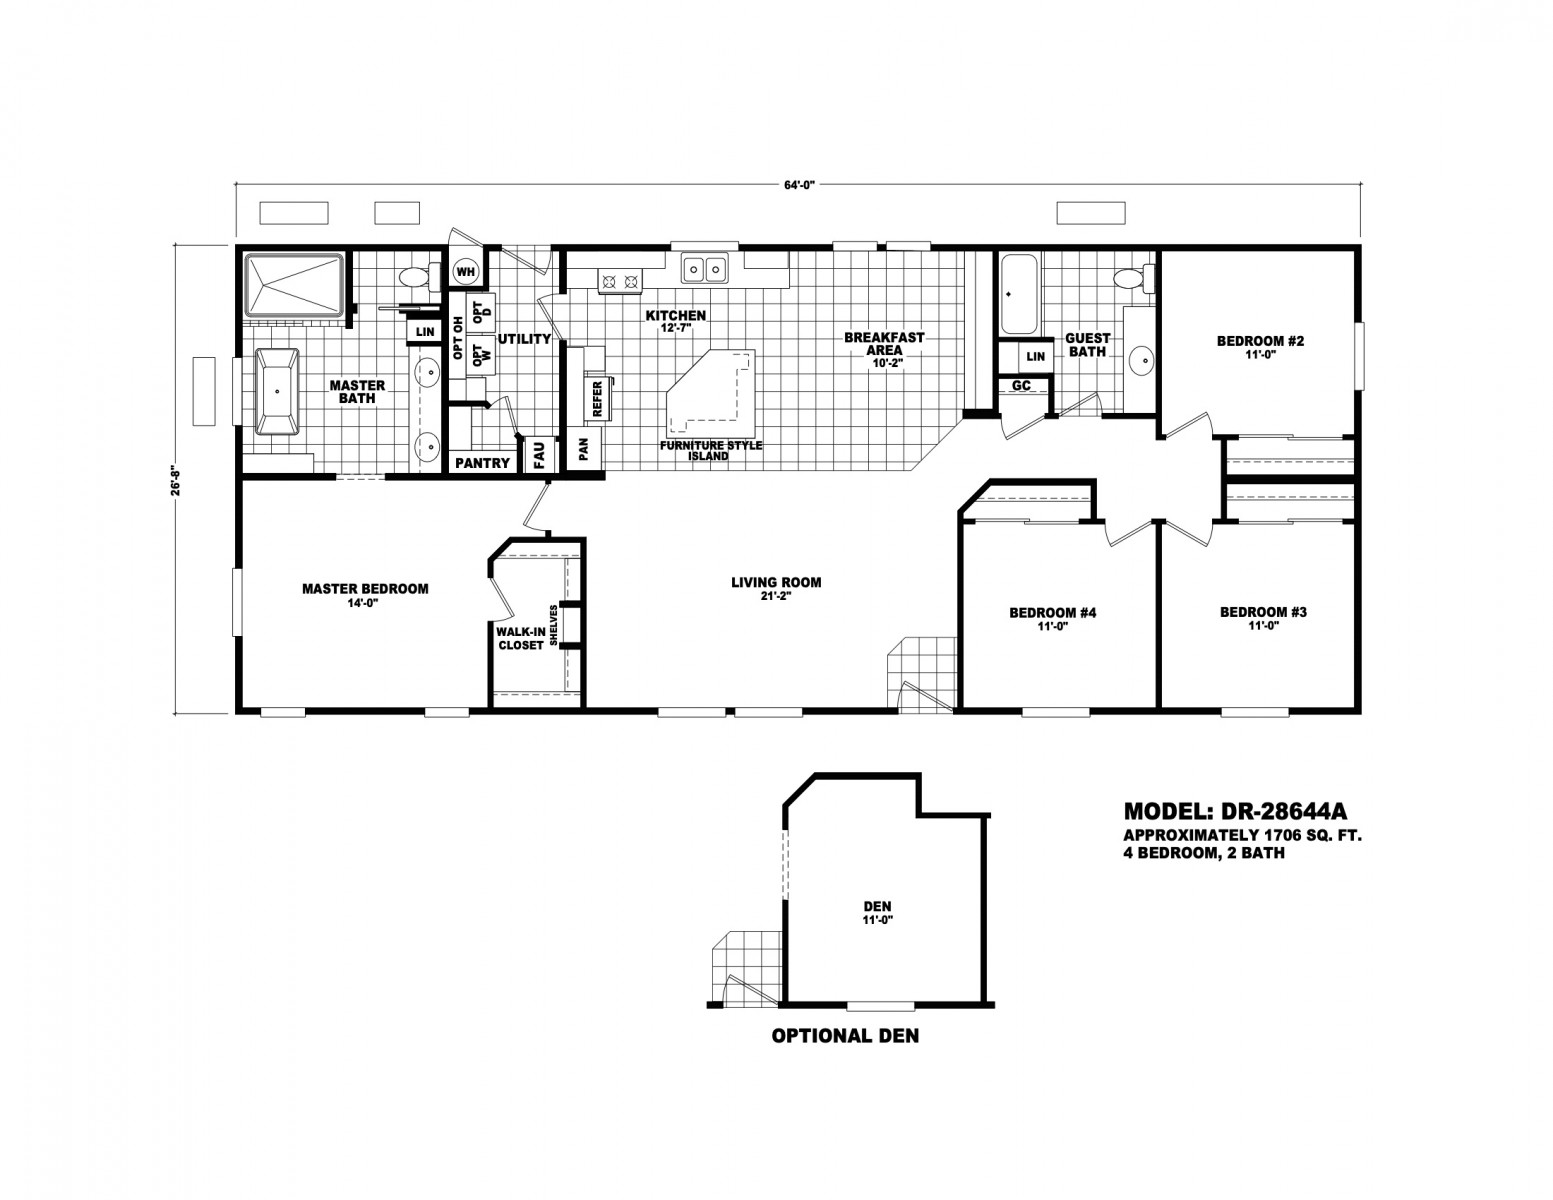 Homes Direct Modular Homes - Model DR28644A - Floorplan